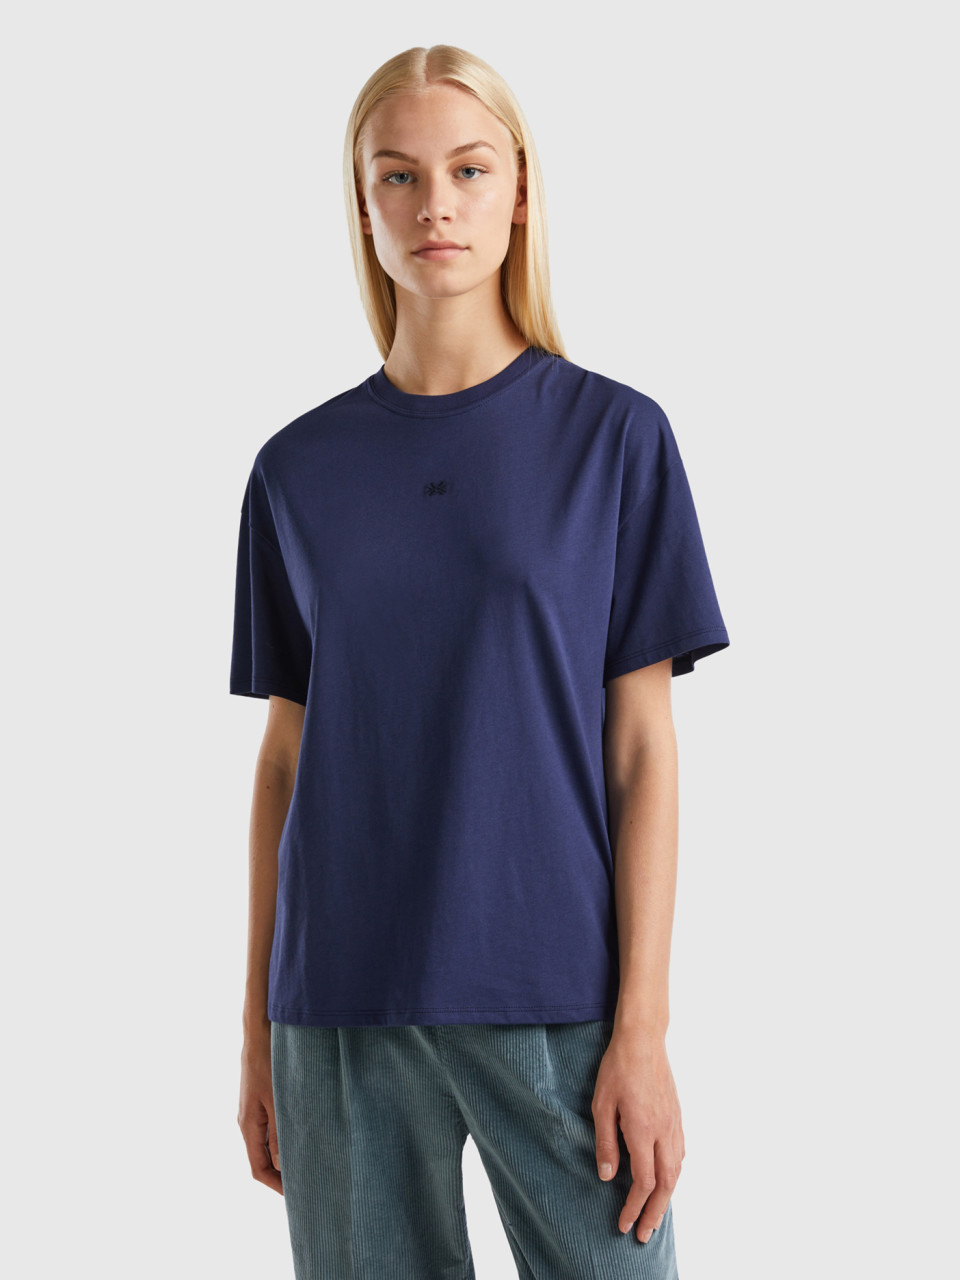 Benetton, T-shirt With Embroidered Logo, Dark Blue, Women